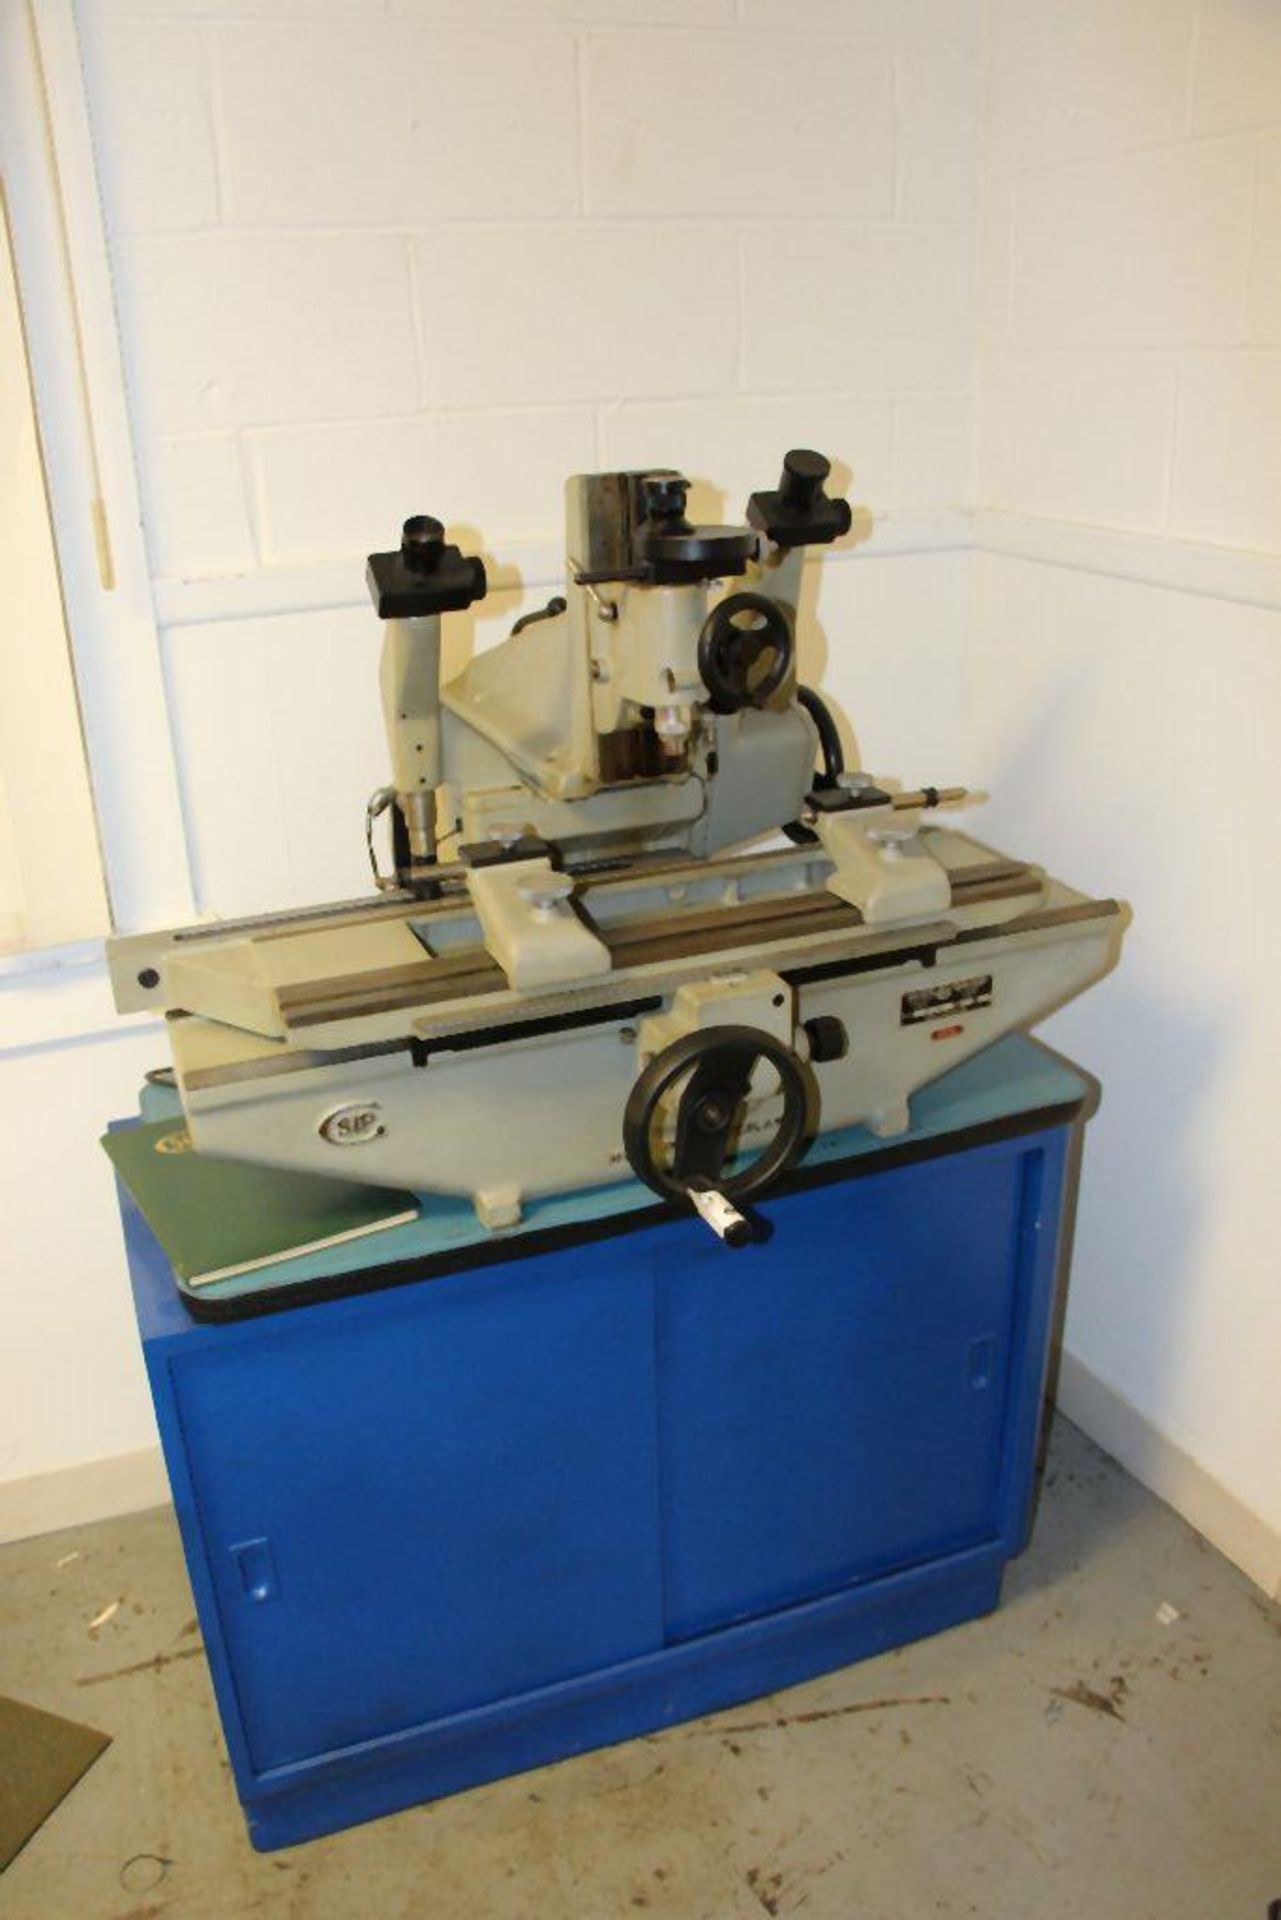 SIP universal measuring machine, model - MU-214B, serial number - 6912